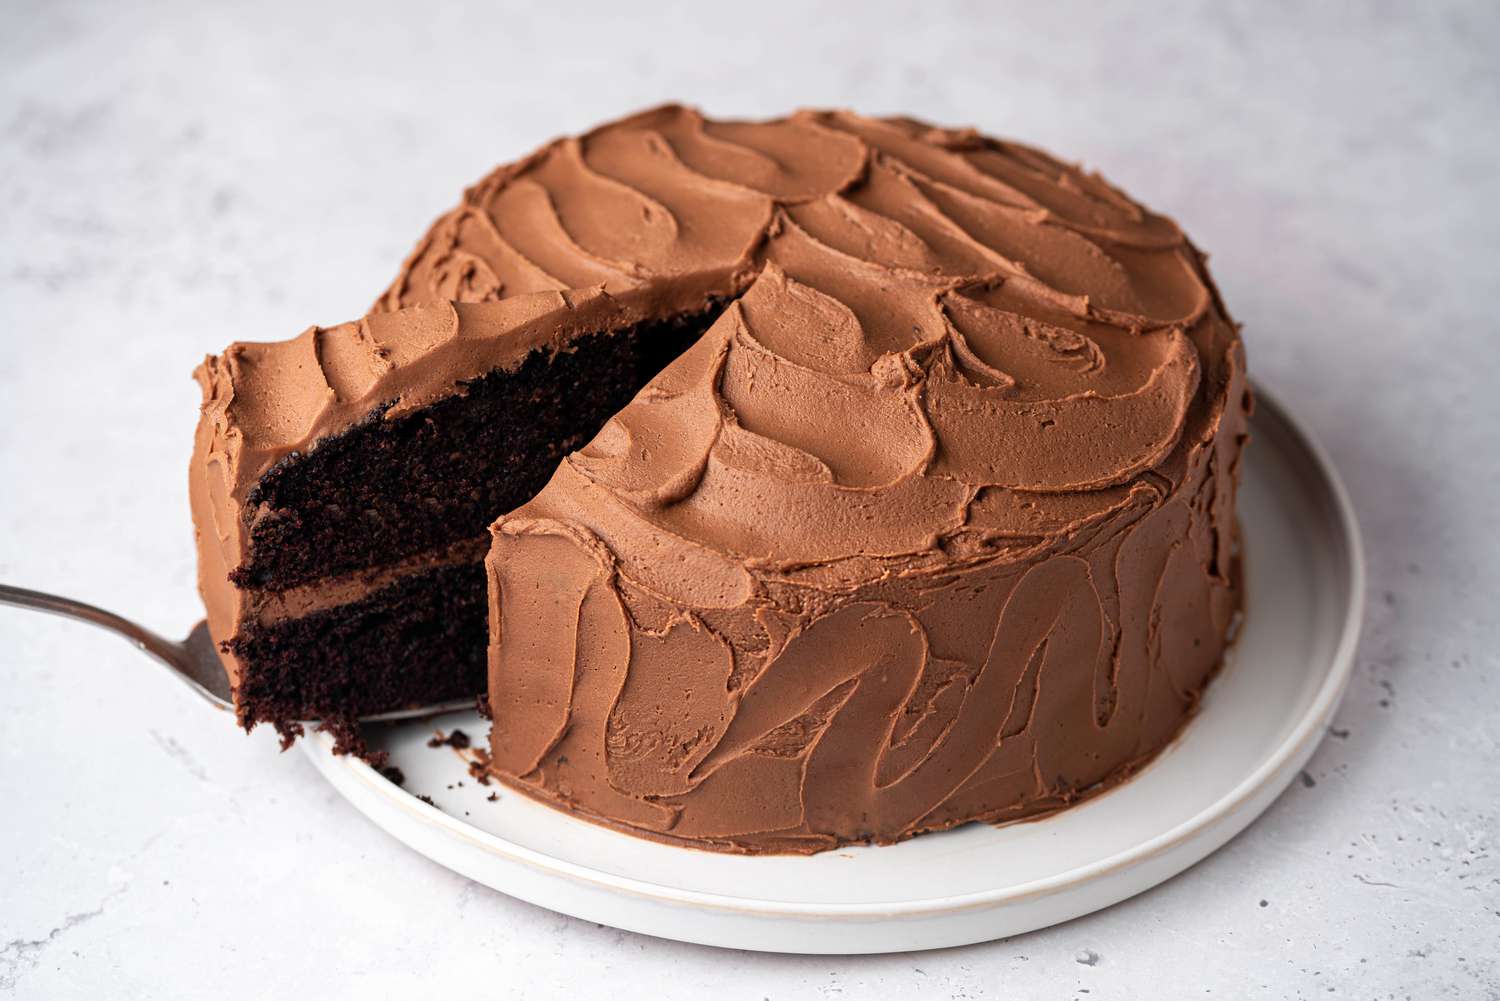 Slice of chocolate cake on white plate